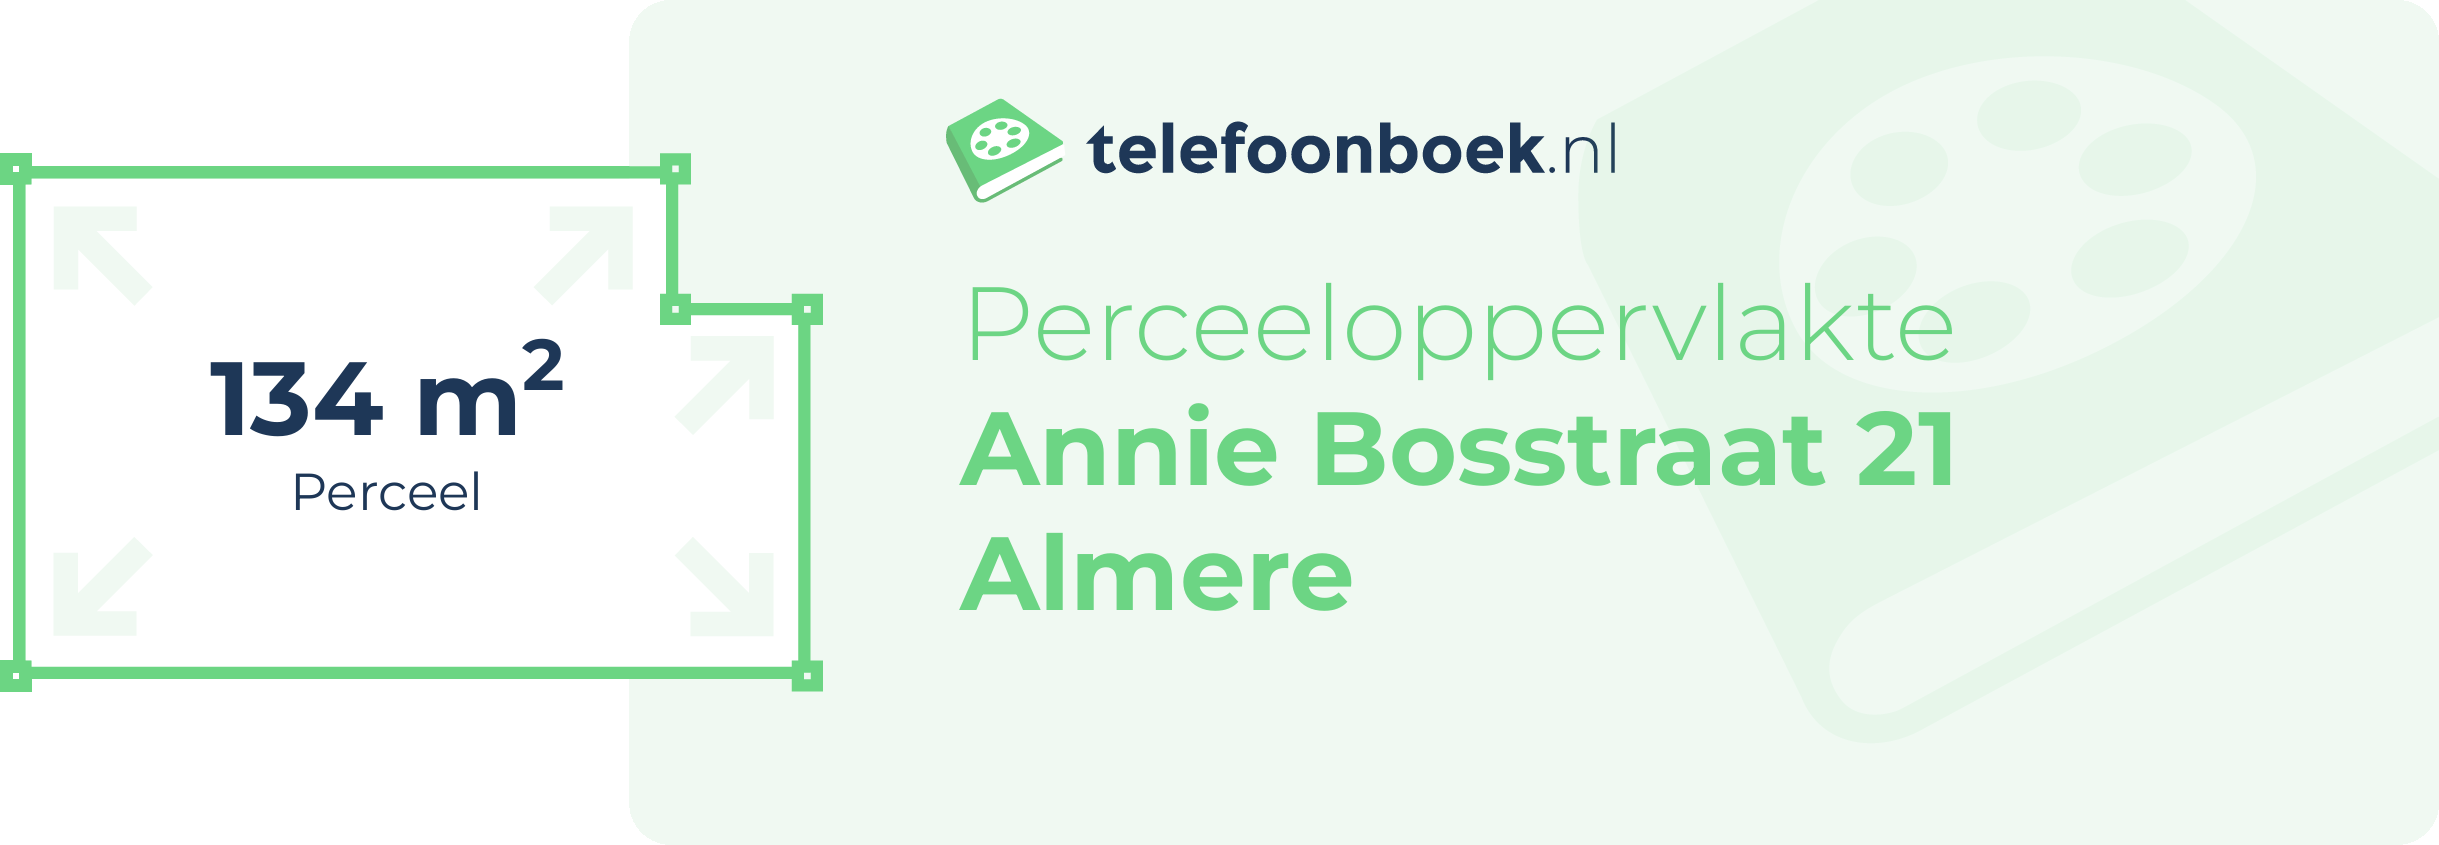 Perceeloppervlakte Annie Bosstraat 21 Almere